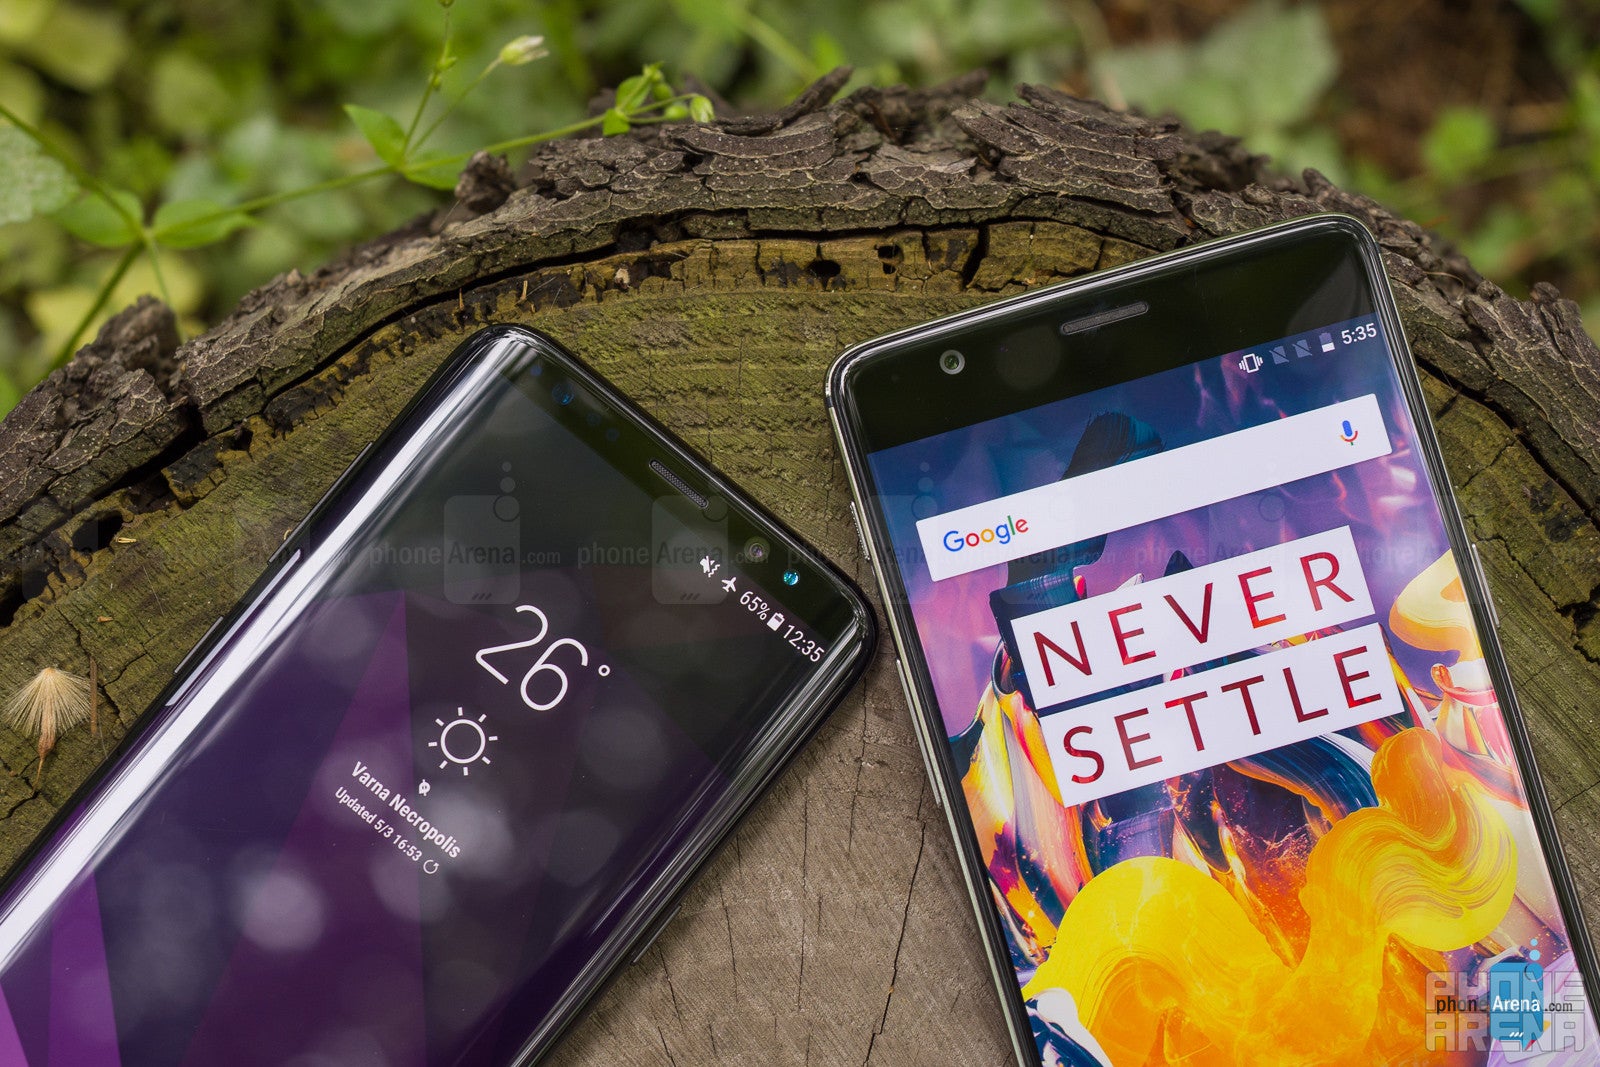 Samsung Galaxy S8 vs OnePlus 3T